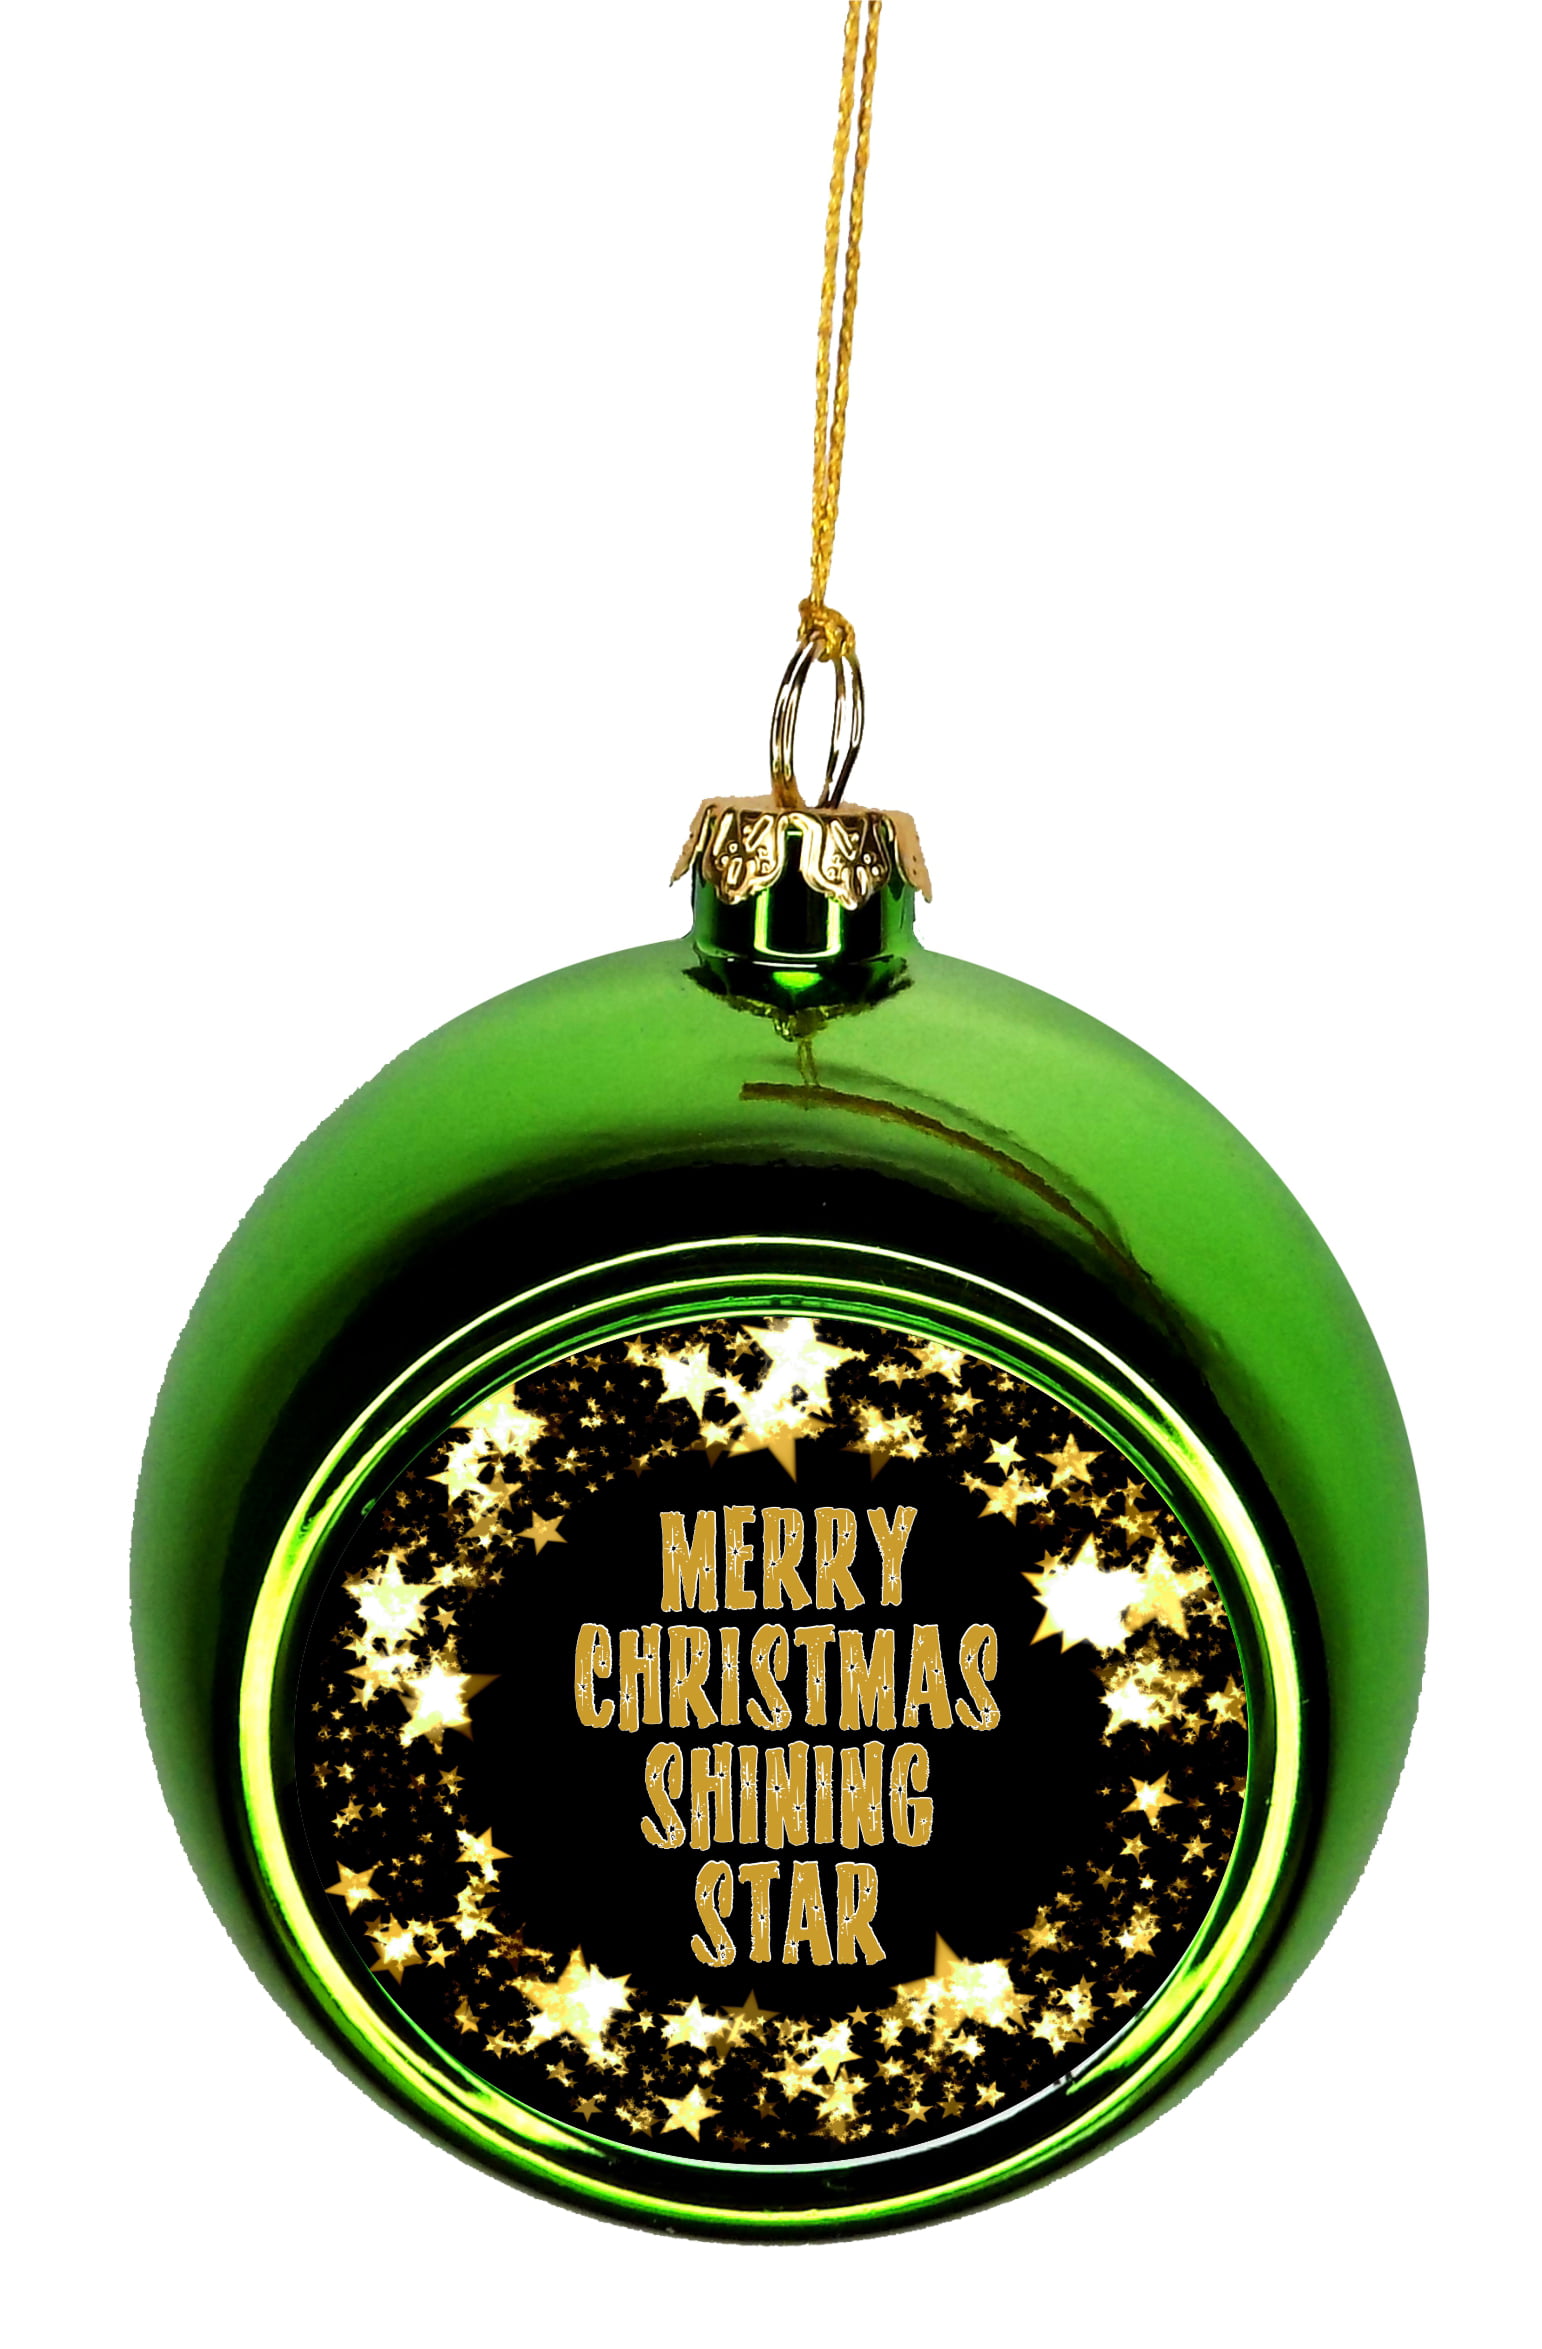 Merry Christmas Shining Star Bauble Christmas Ornaments Green Bauble Tree Xmas Balls Walmart Com Walmart Com